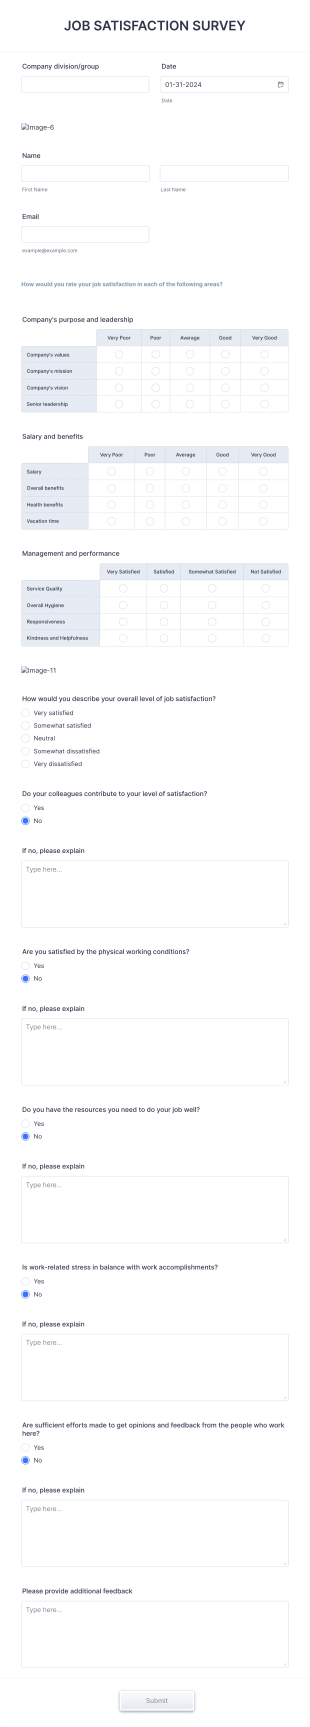 Job Satisfaction Survey Form Template